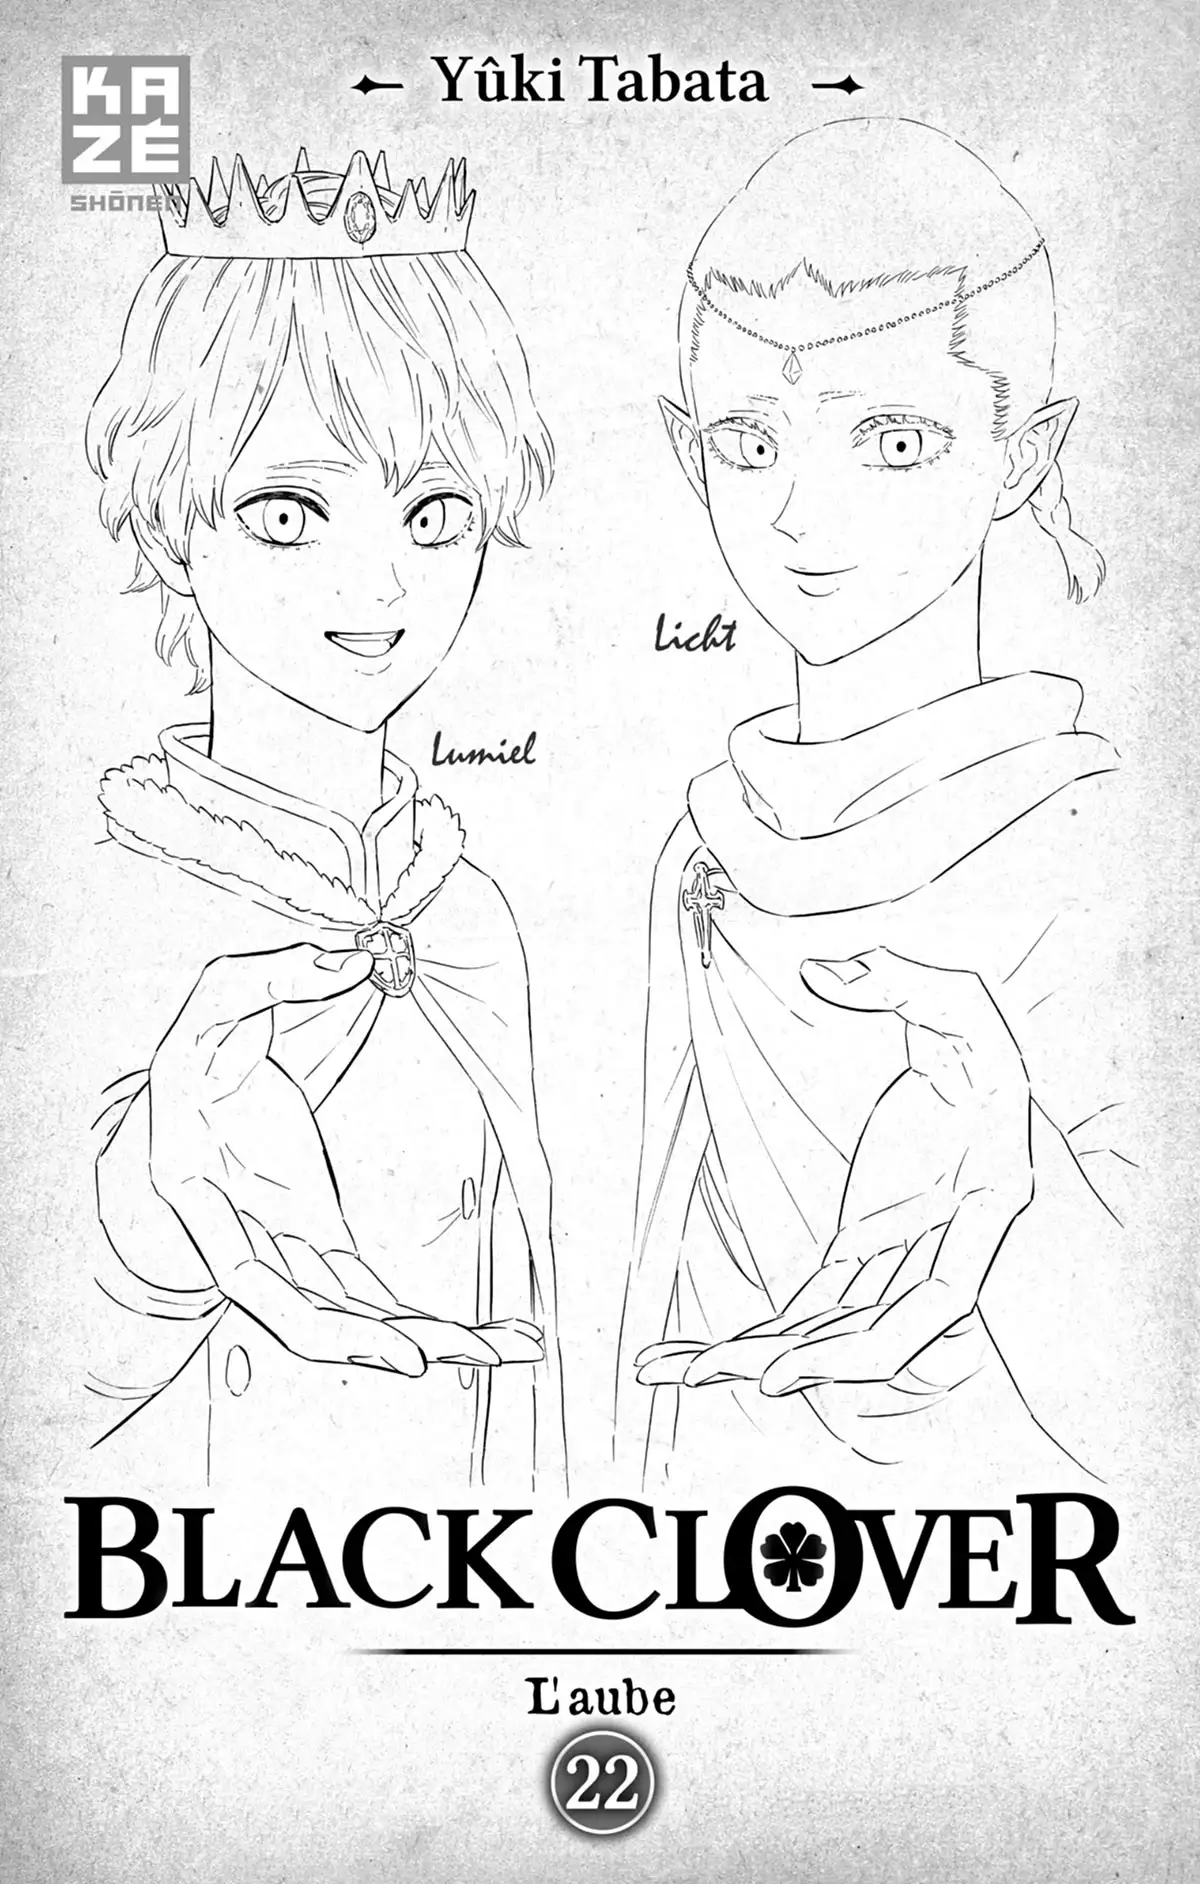 Black Clover Volume 22 page 2